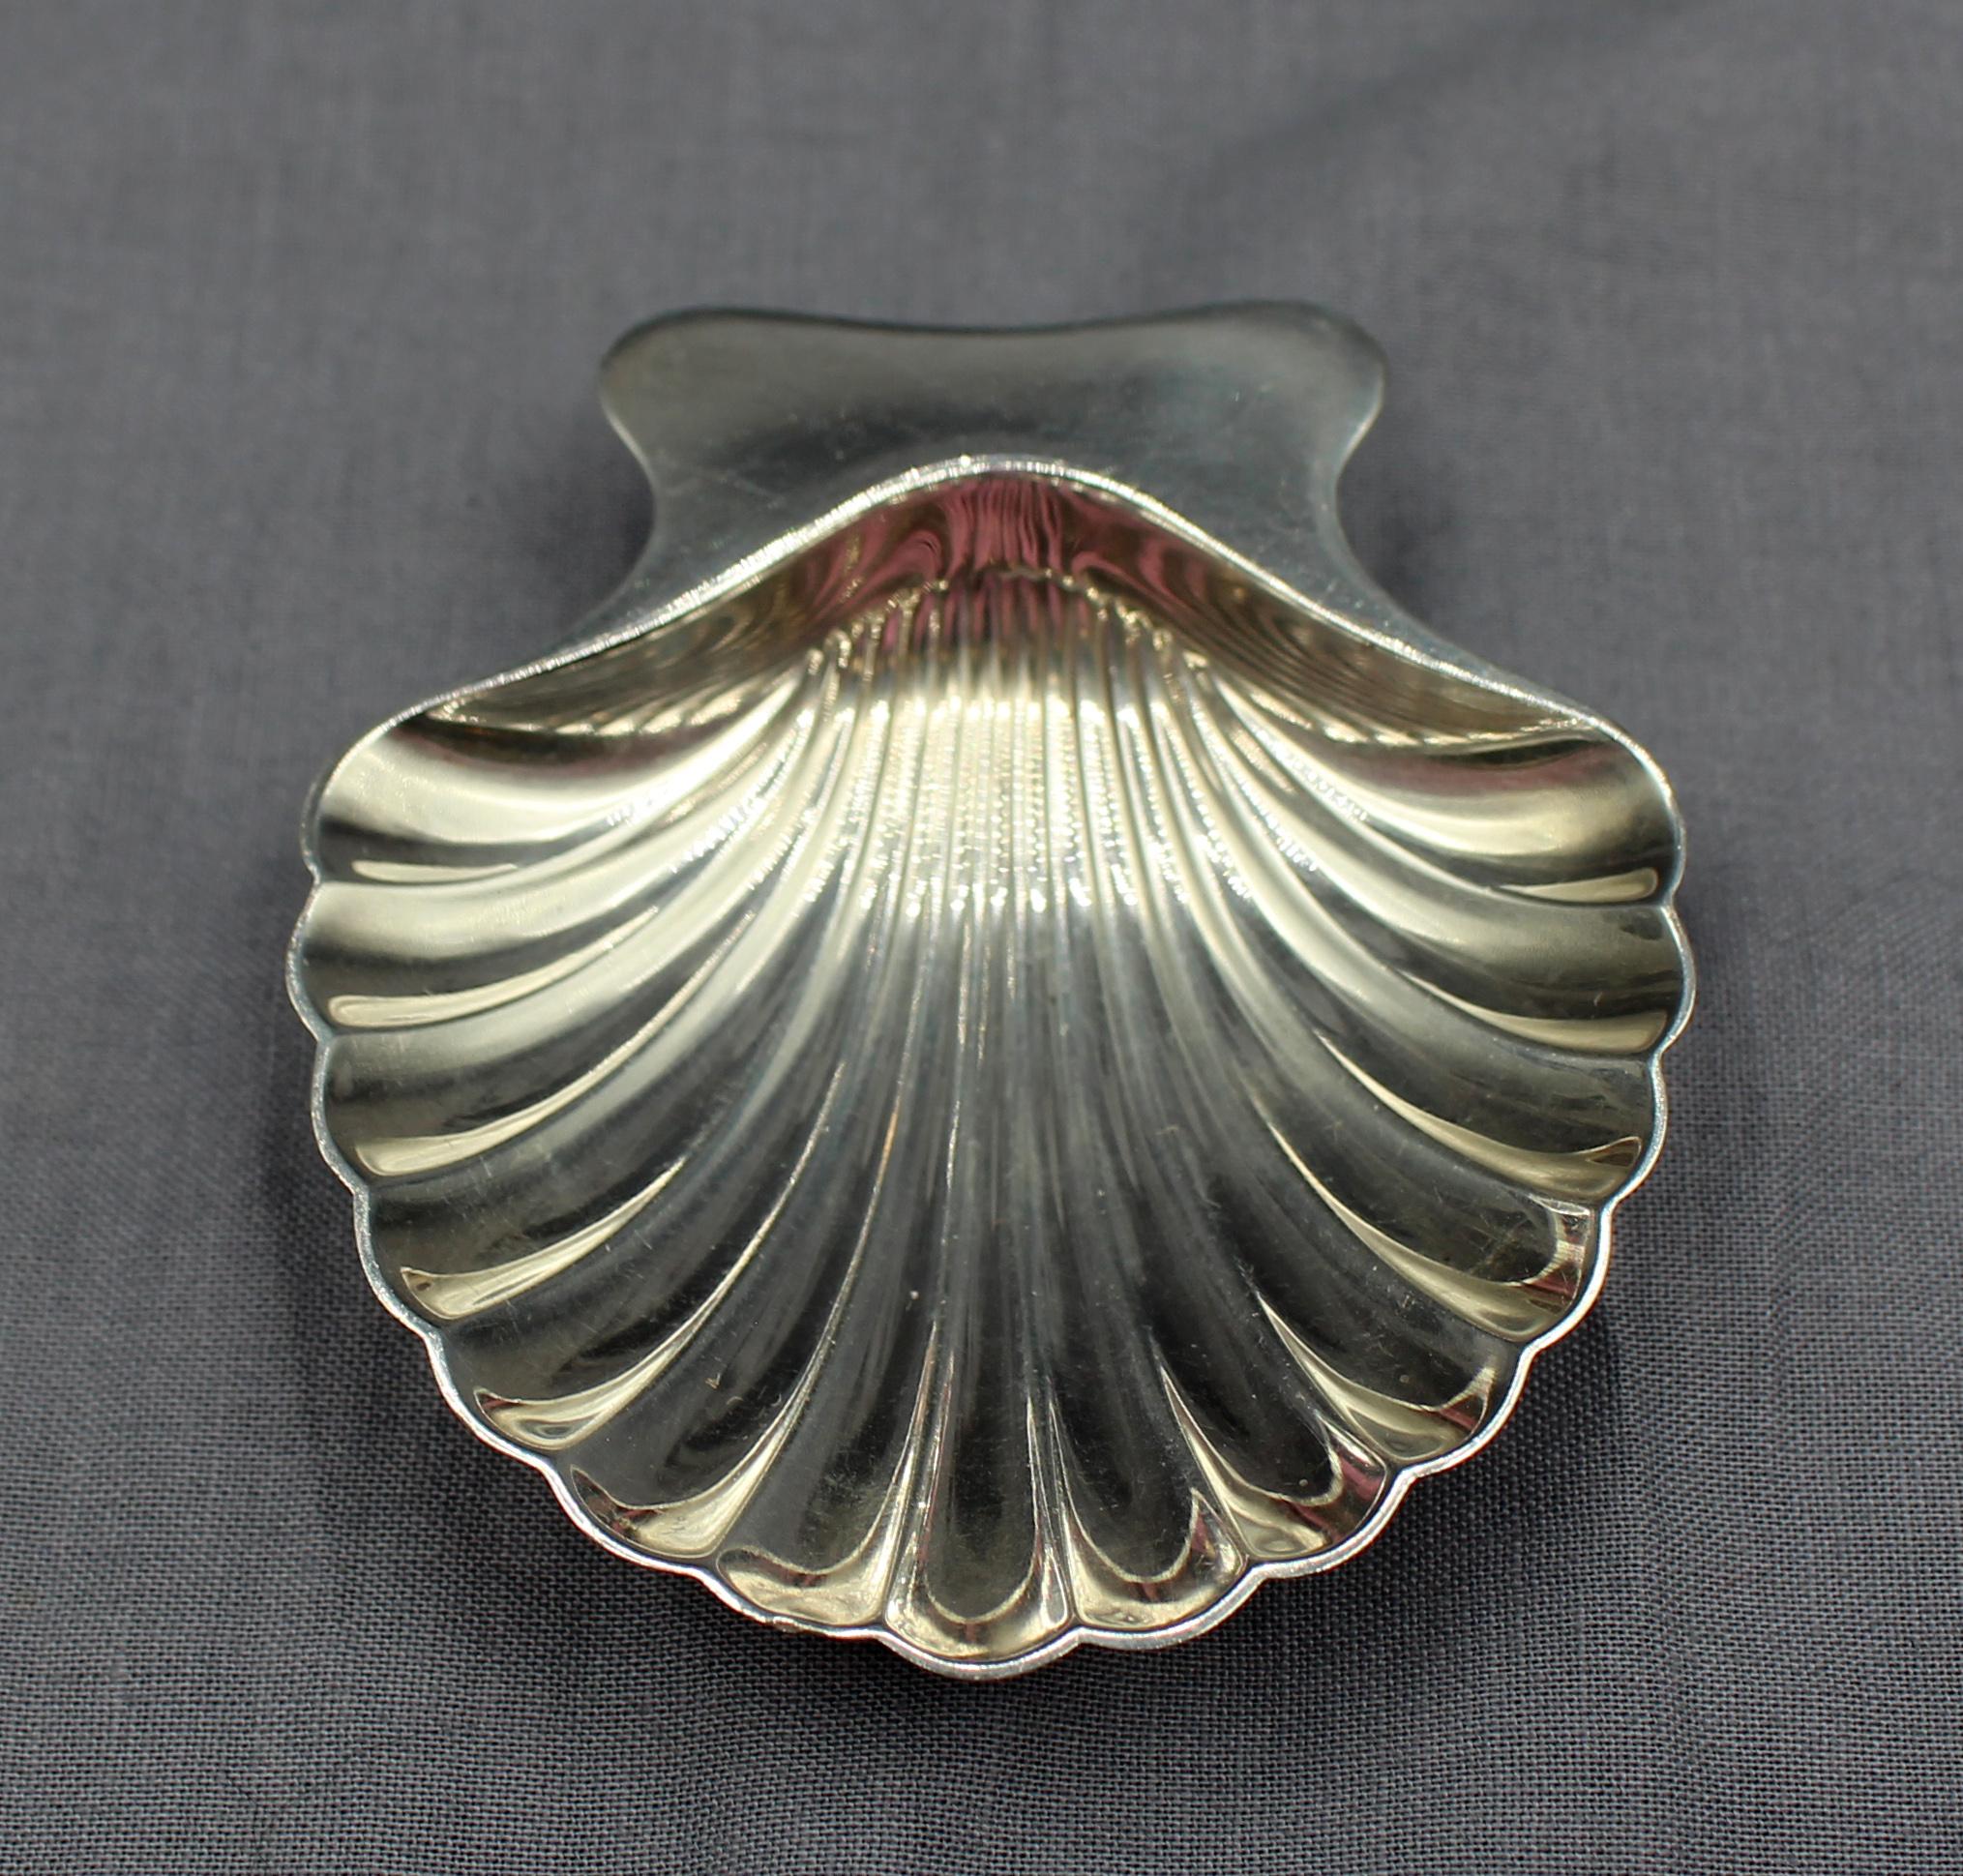 Circa 1960s set of 4 sterling scallop shell mint dishes, Tiffany. Raised on ball feet. 4.75 troy oz. Estate of Linda Kornberg.
2 7/8